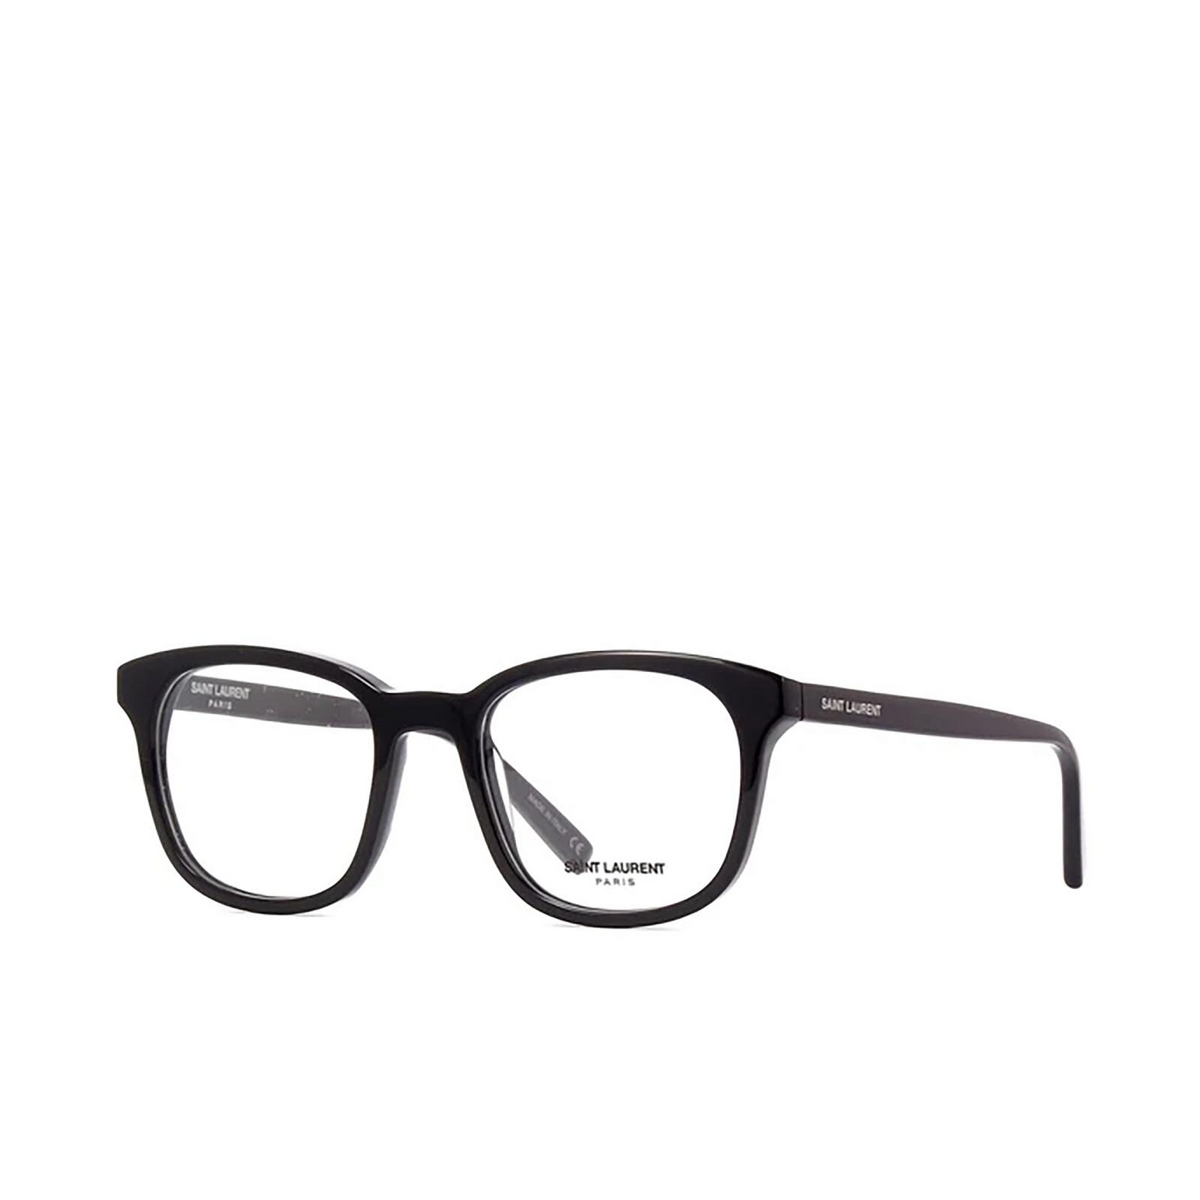 Saint Laurent SL 459 Eyeglasses - Mia Burton